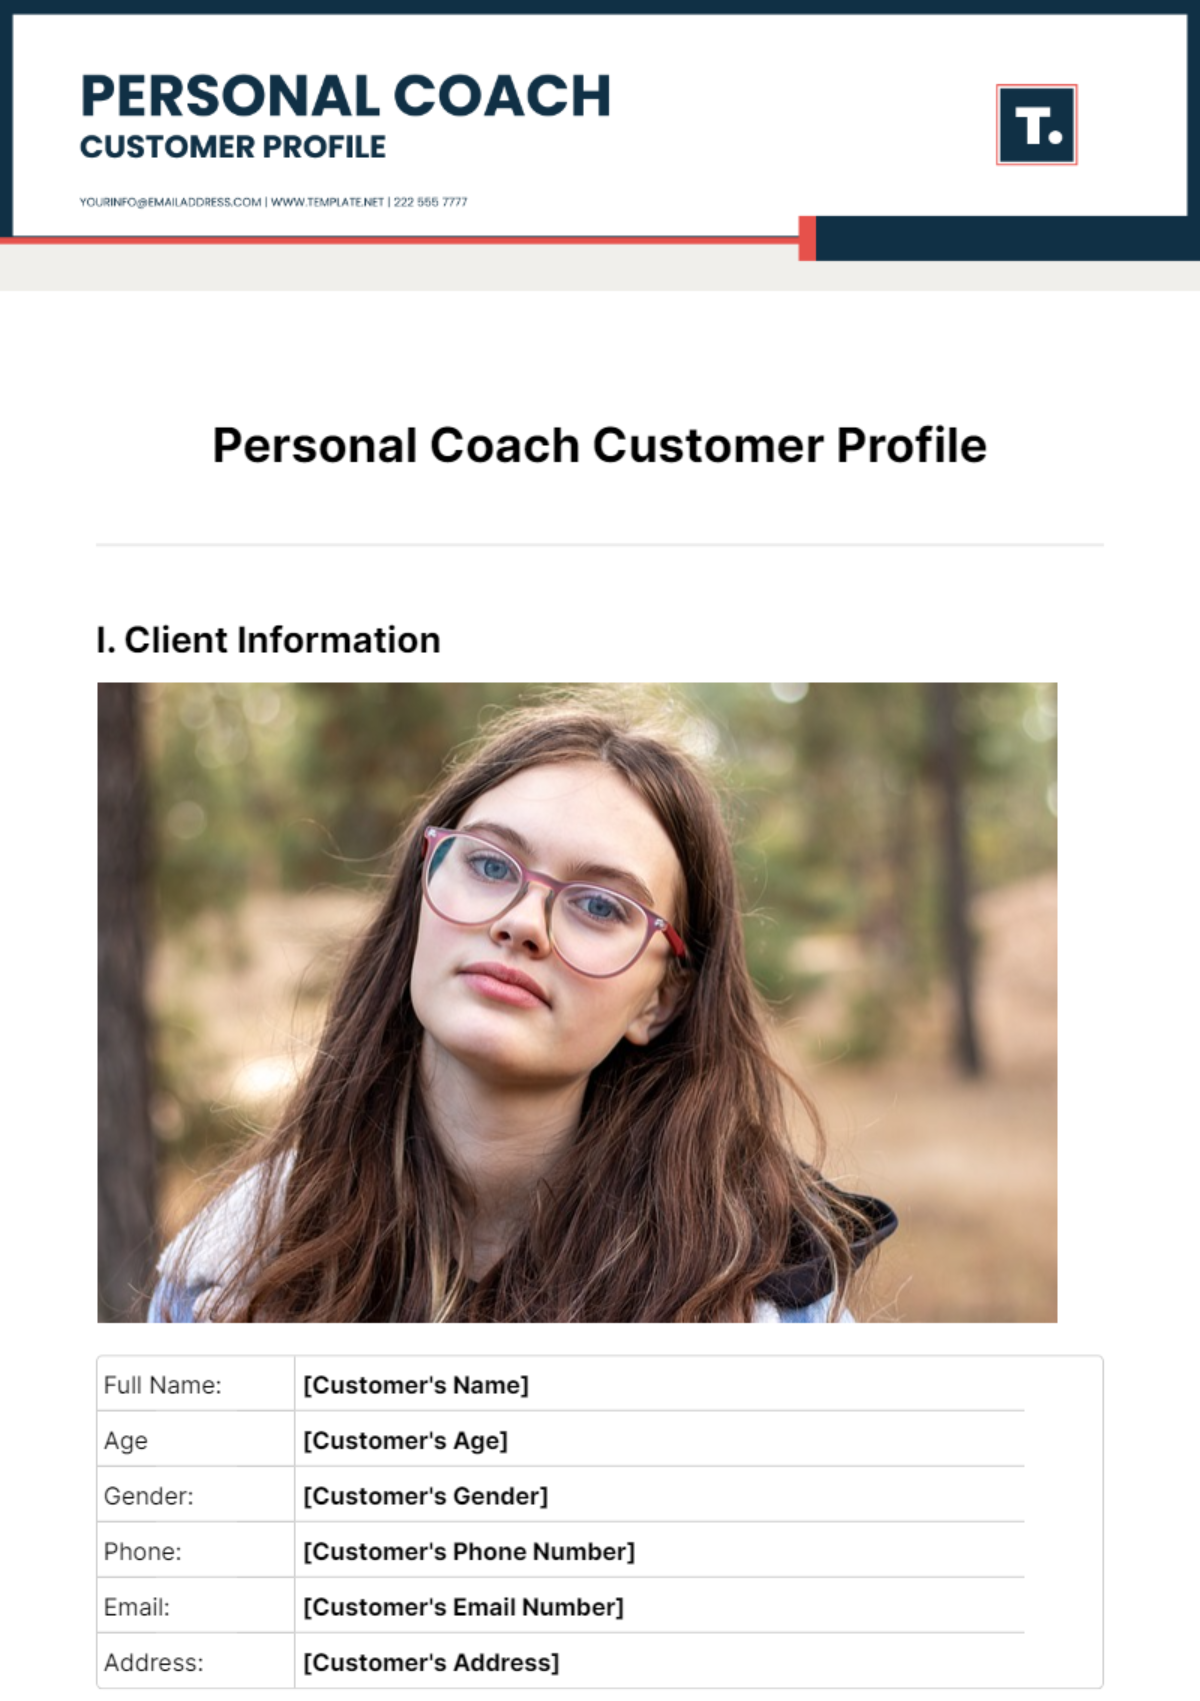 Personal Coach Customer Profile Template